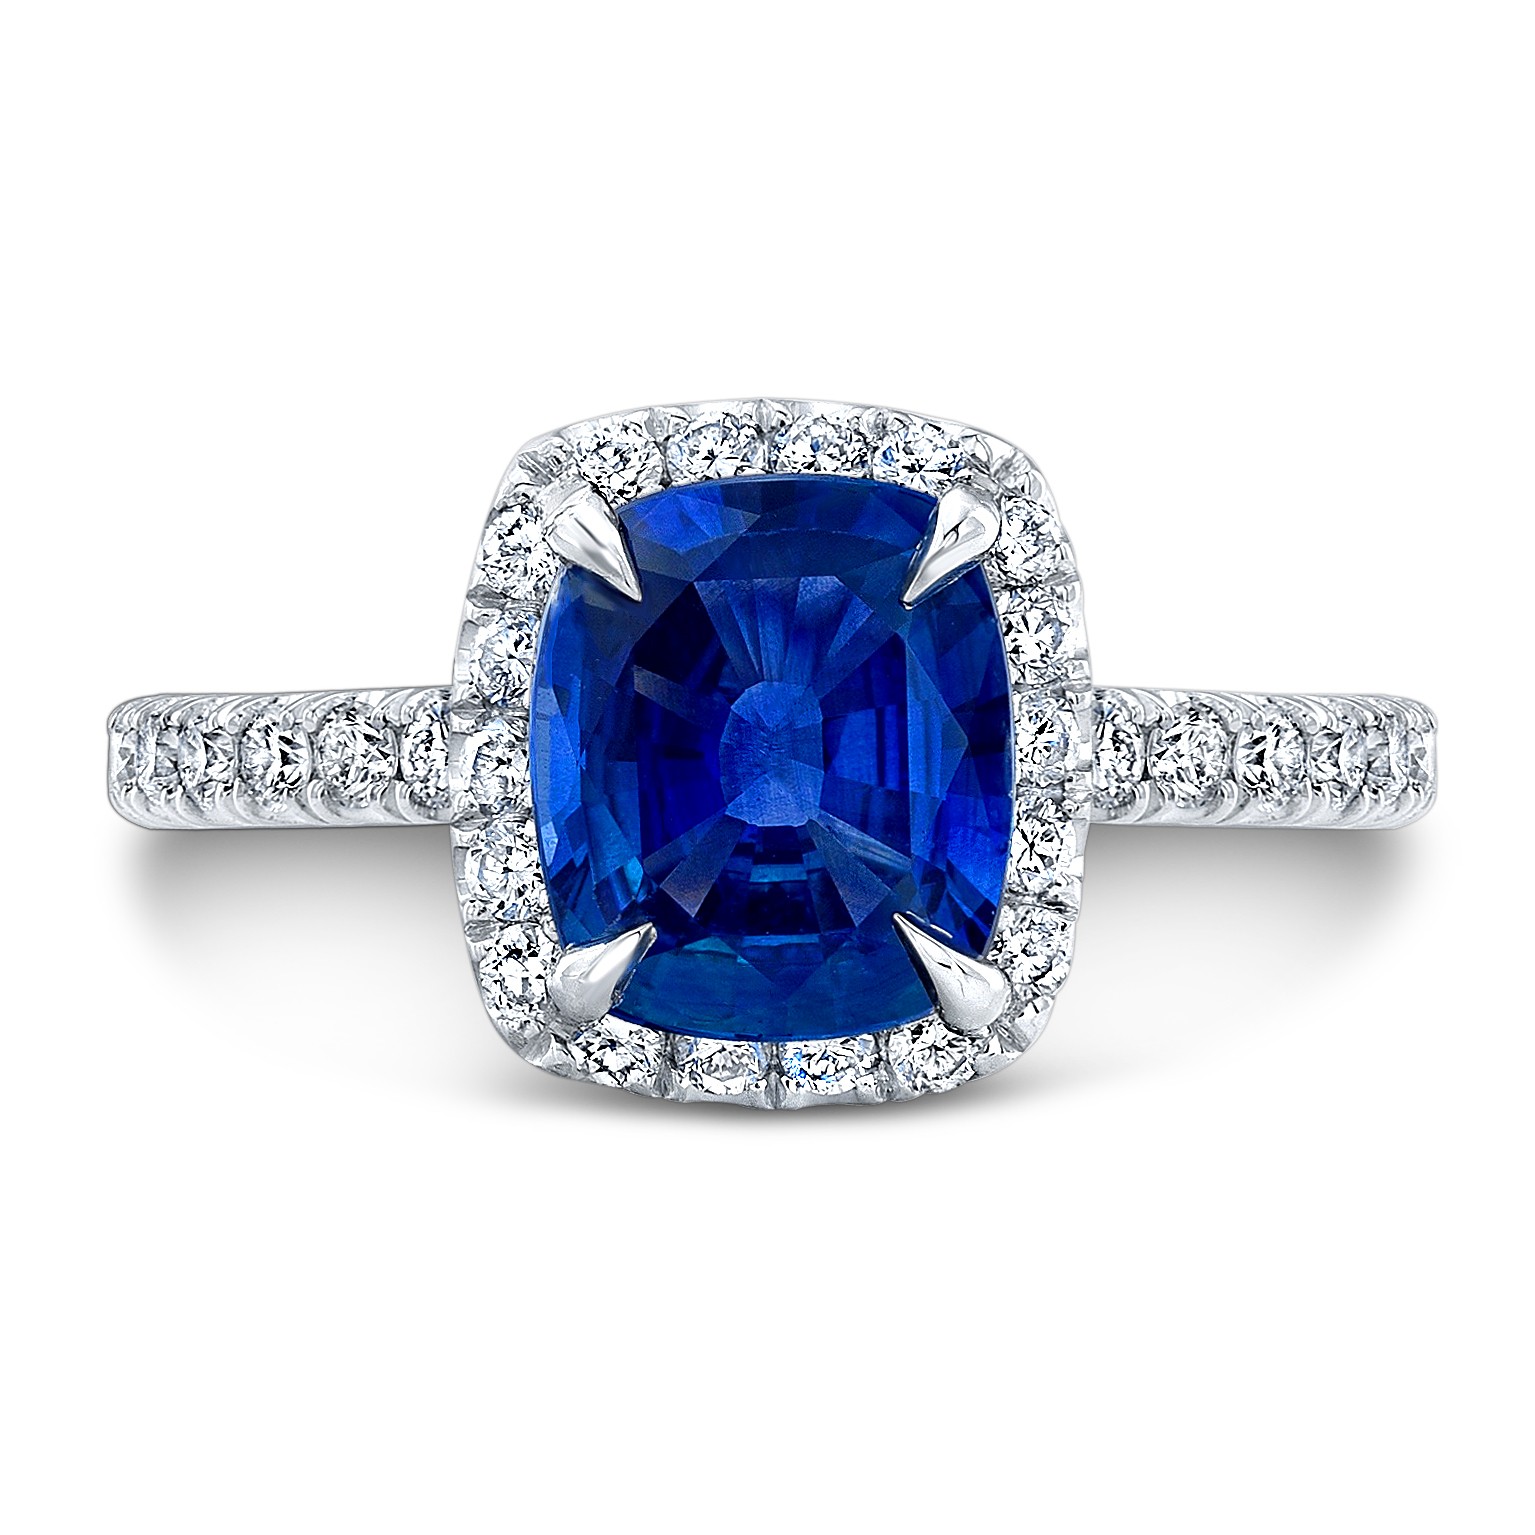 Cushion Cut Sapphire Diamond Halo Engagement Ring in Platinum - Bridal